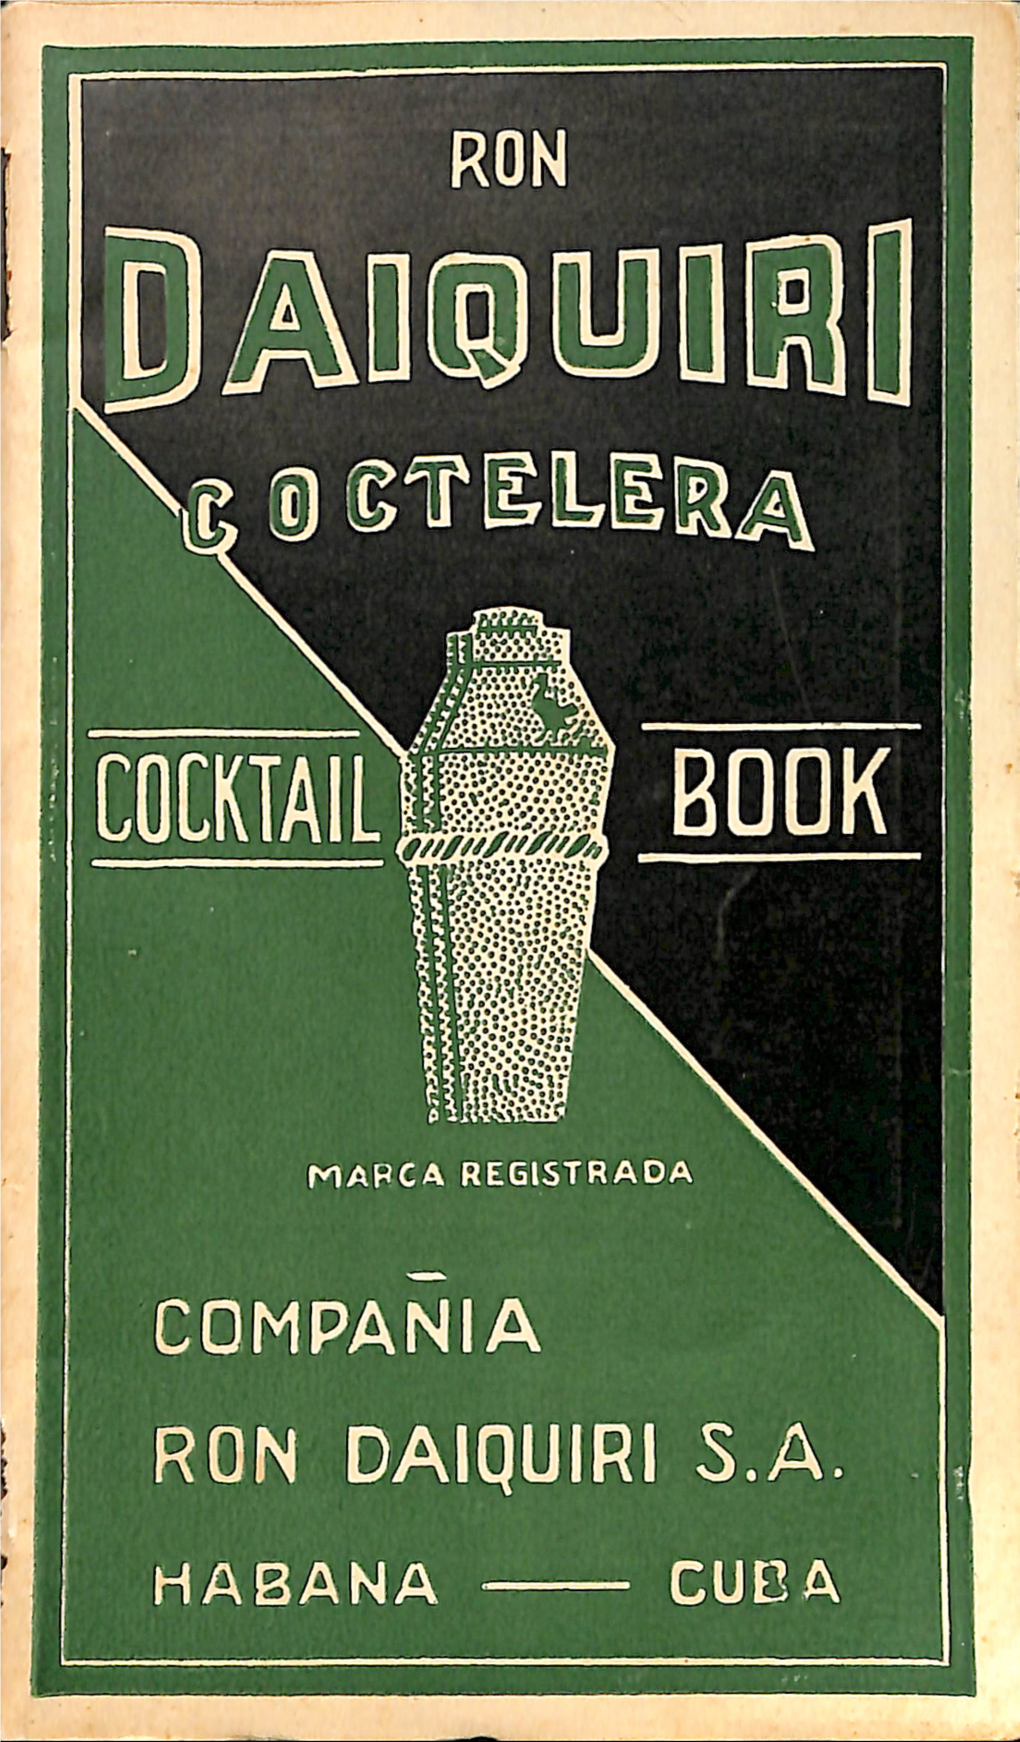 1948 Ron Daiquiri Coctelera Cocktail Book